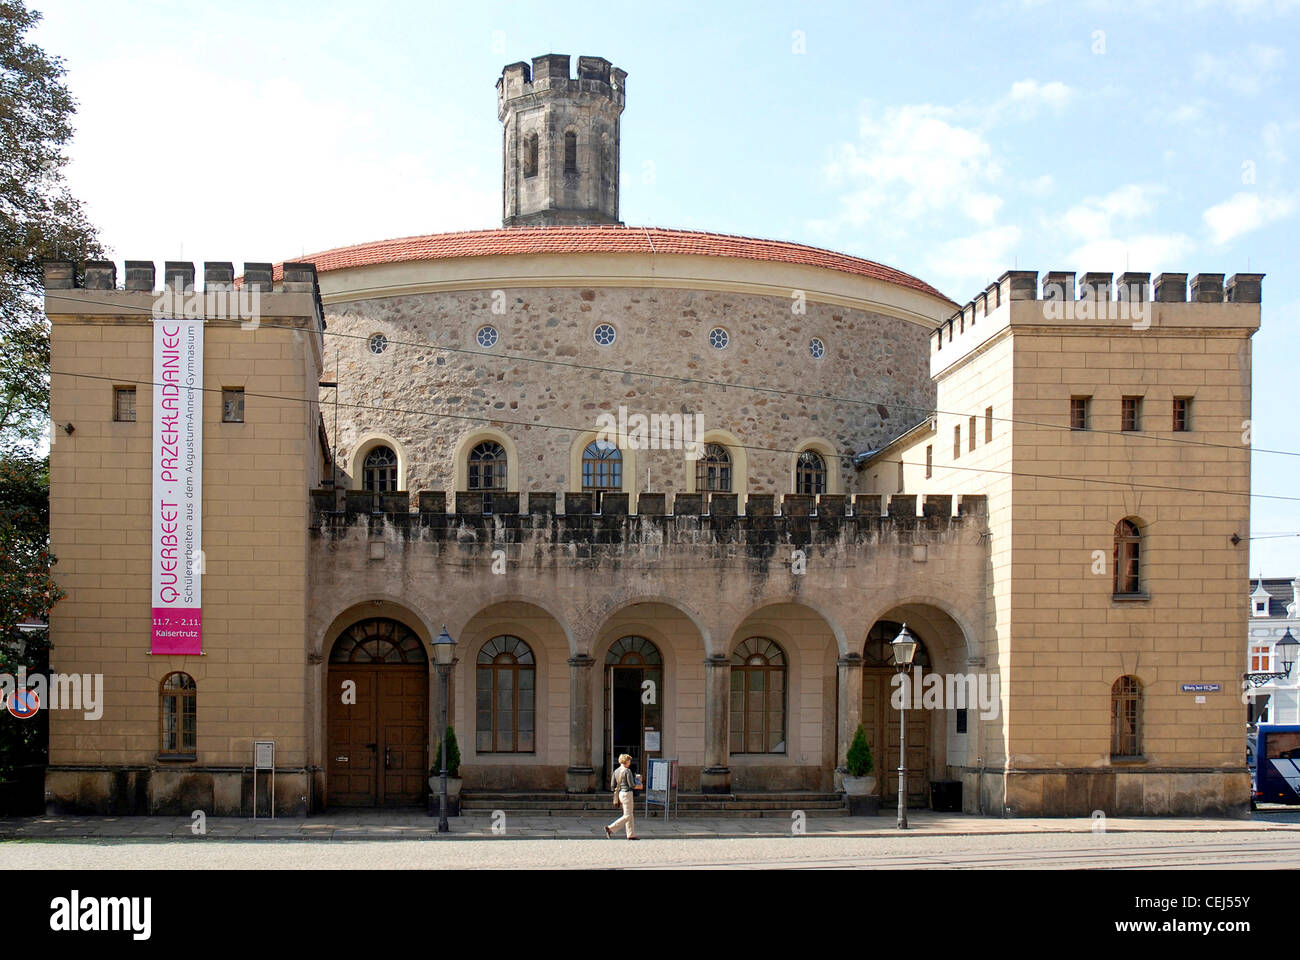 Municipal theatre of Goerlitz at the Deminaniplatz with the Bastion Kaisertrutz in the background. Stock Photo